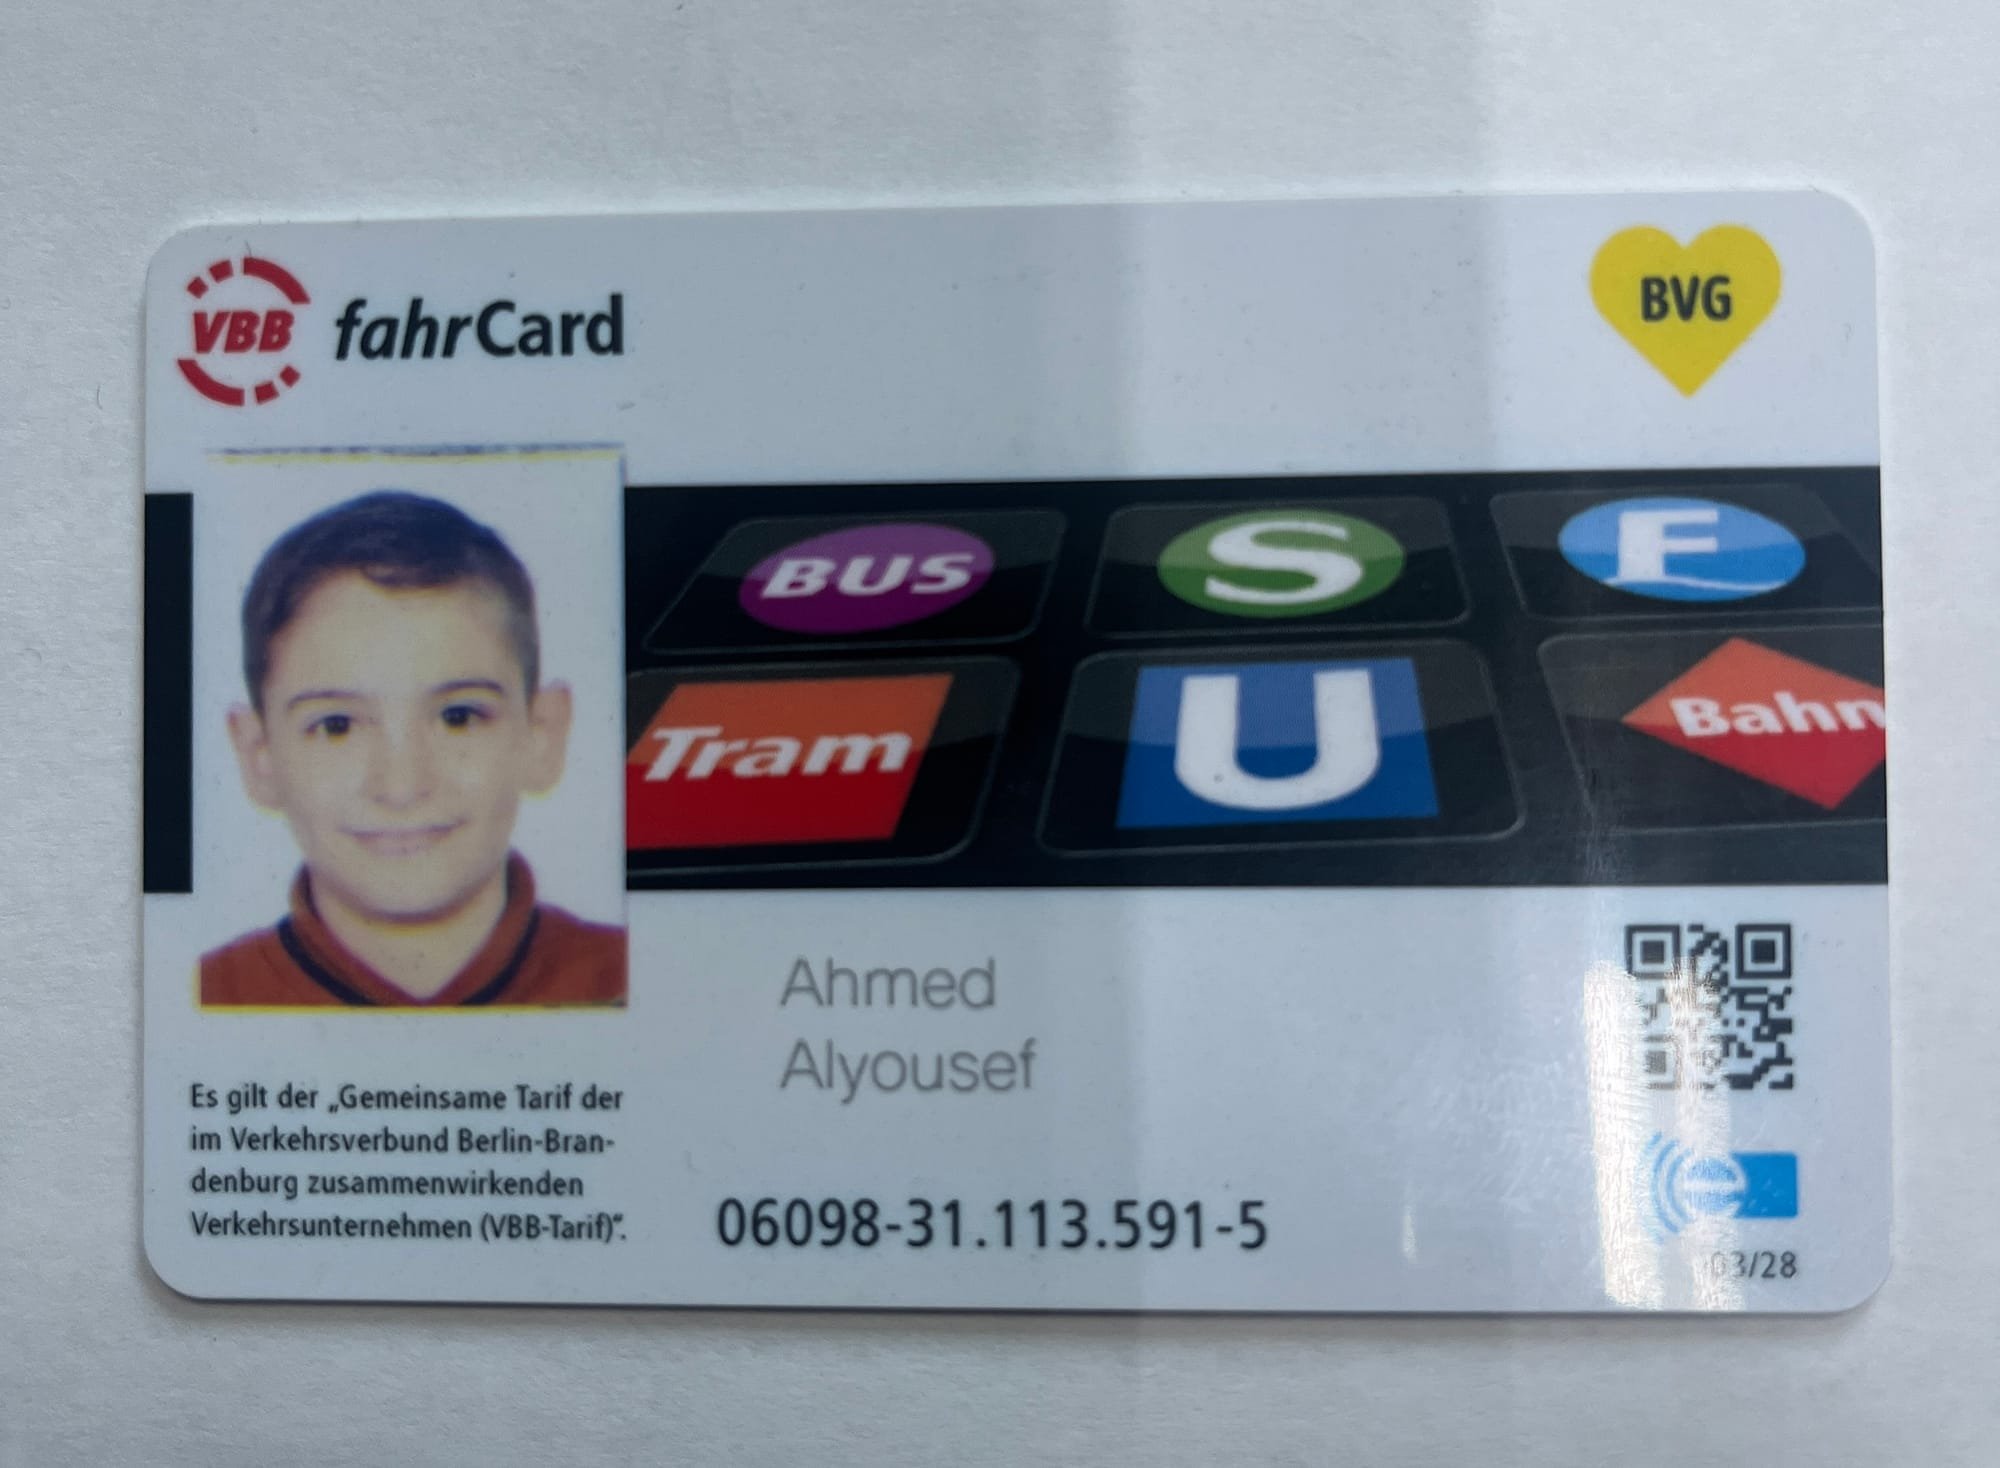 VBB fahrCard